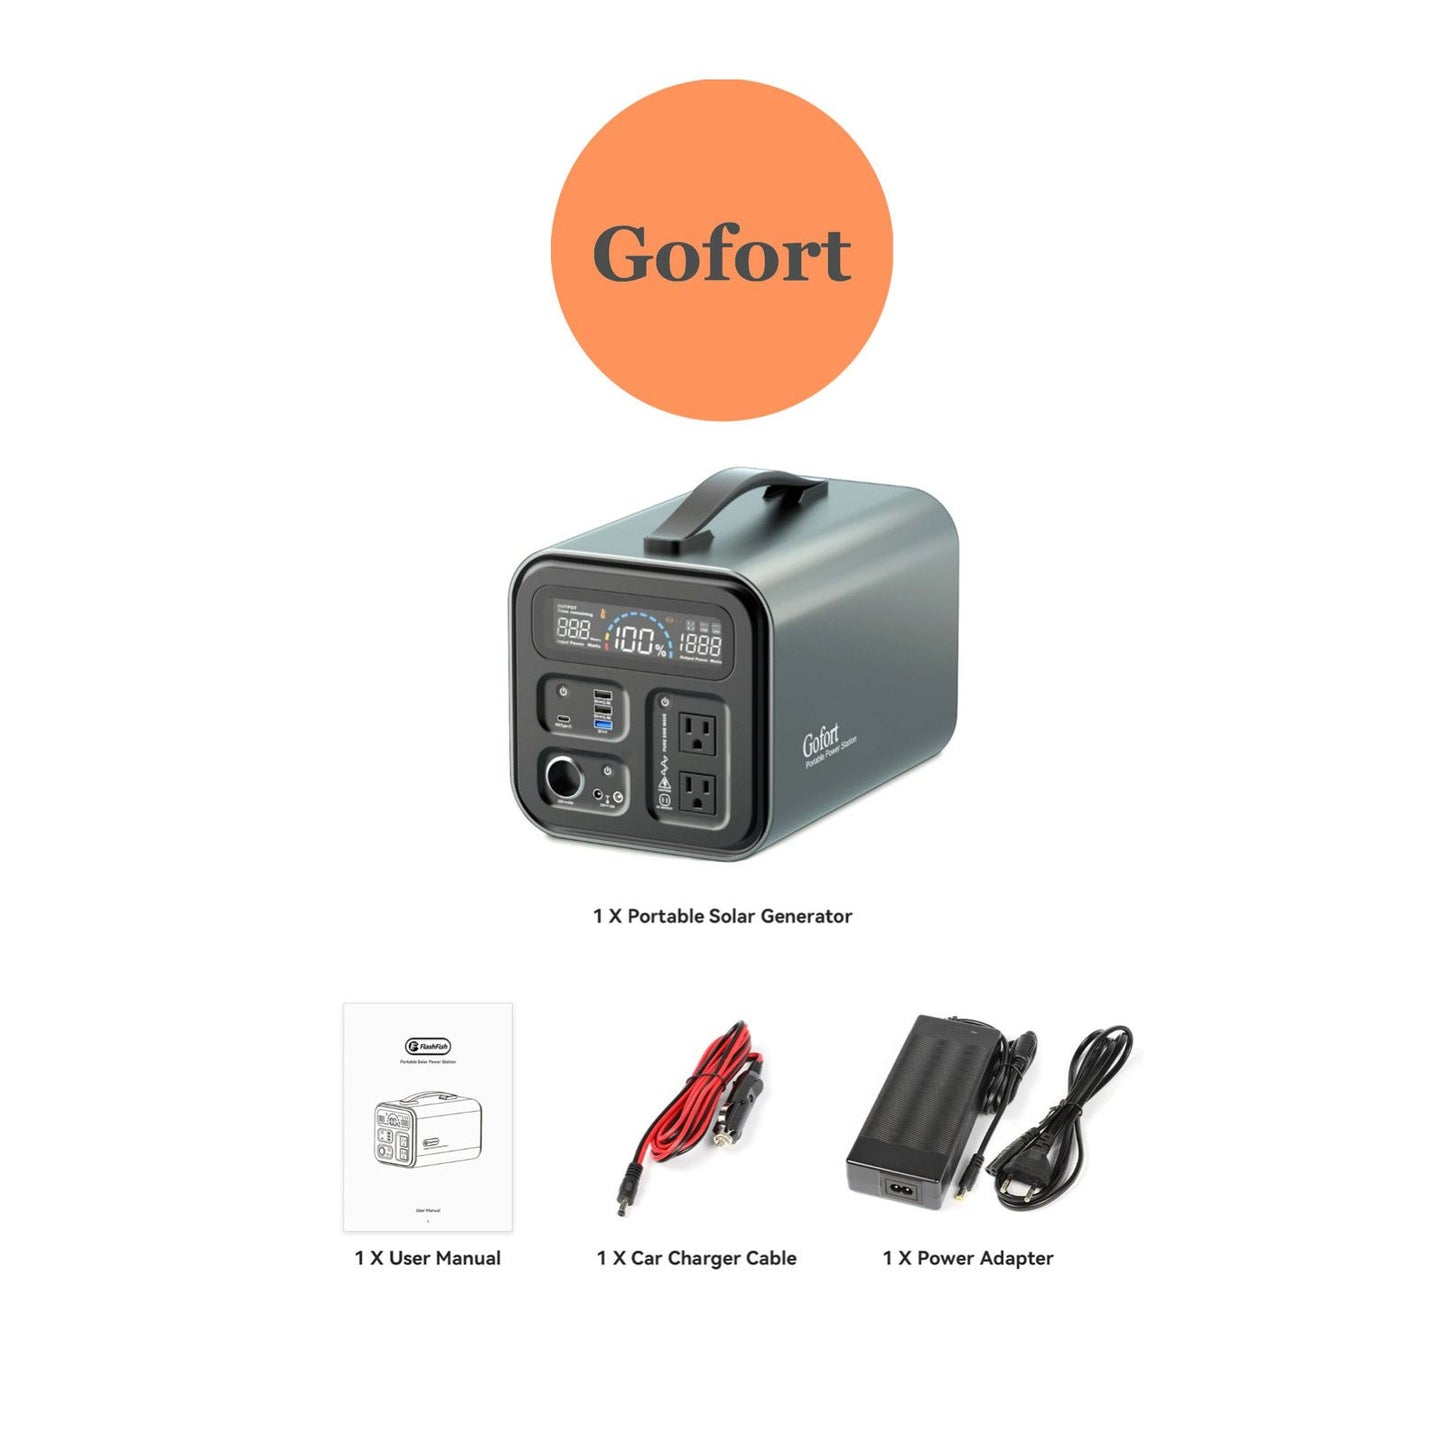 Gofort UA1100 (297600mAh/1100Wh/1200W) Portable Power Station - 1 Year Warranty